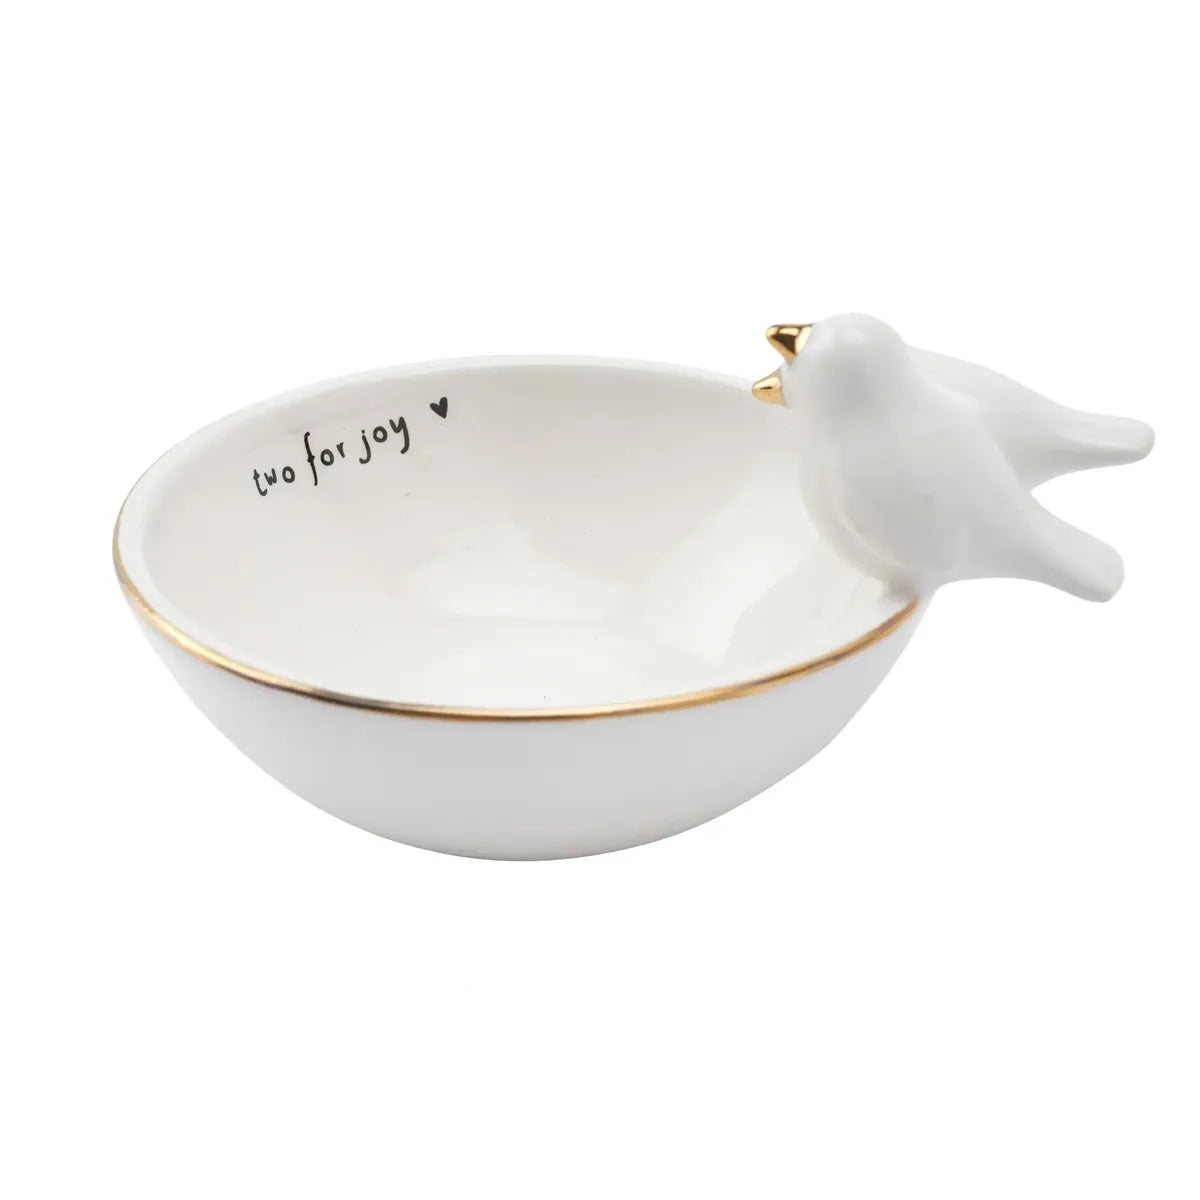 “Two for joy” trinket bowl